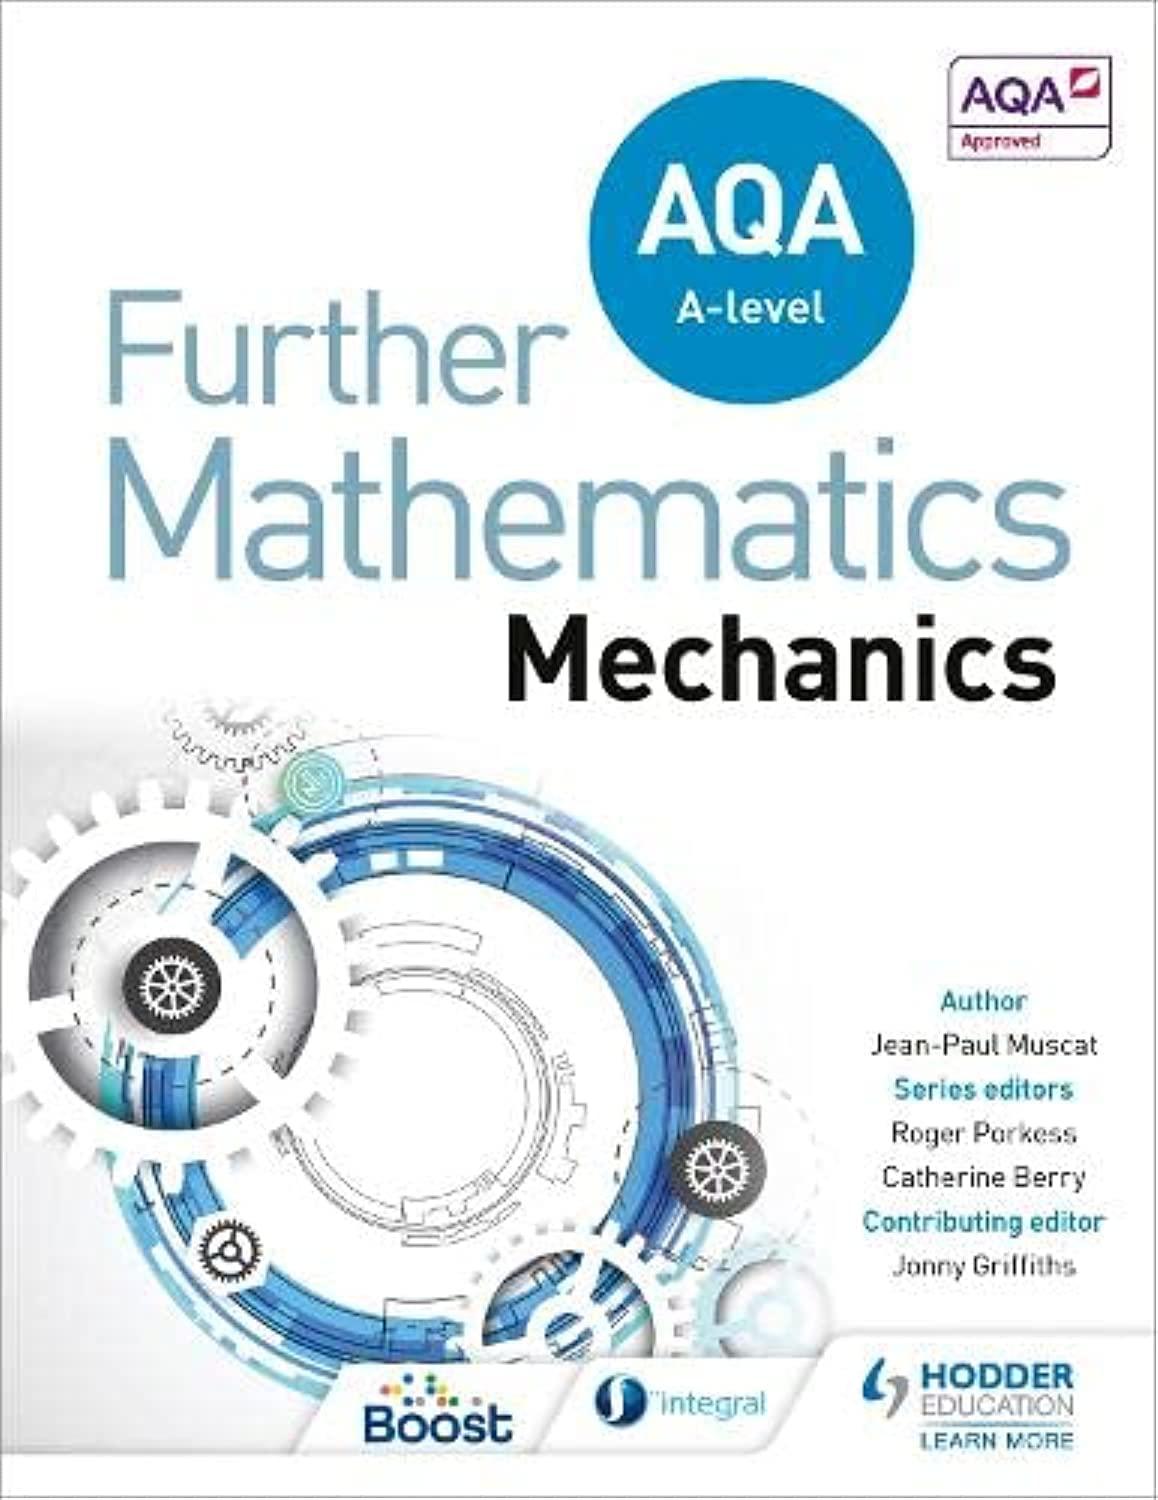 aqa a level further mathematics mechanics 1st edition jean-paul muscat, jonny griffiths 1510414428,